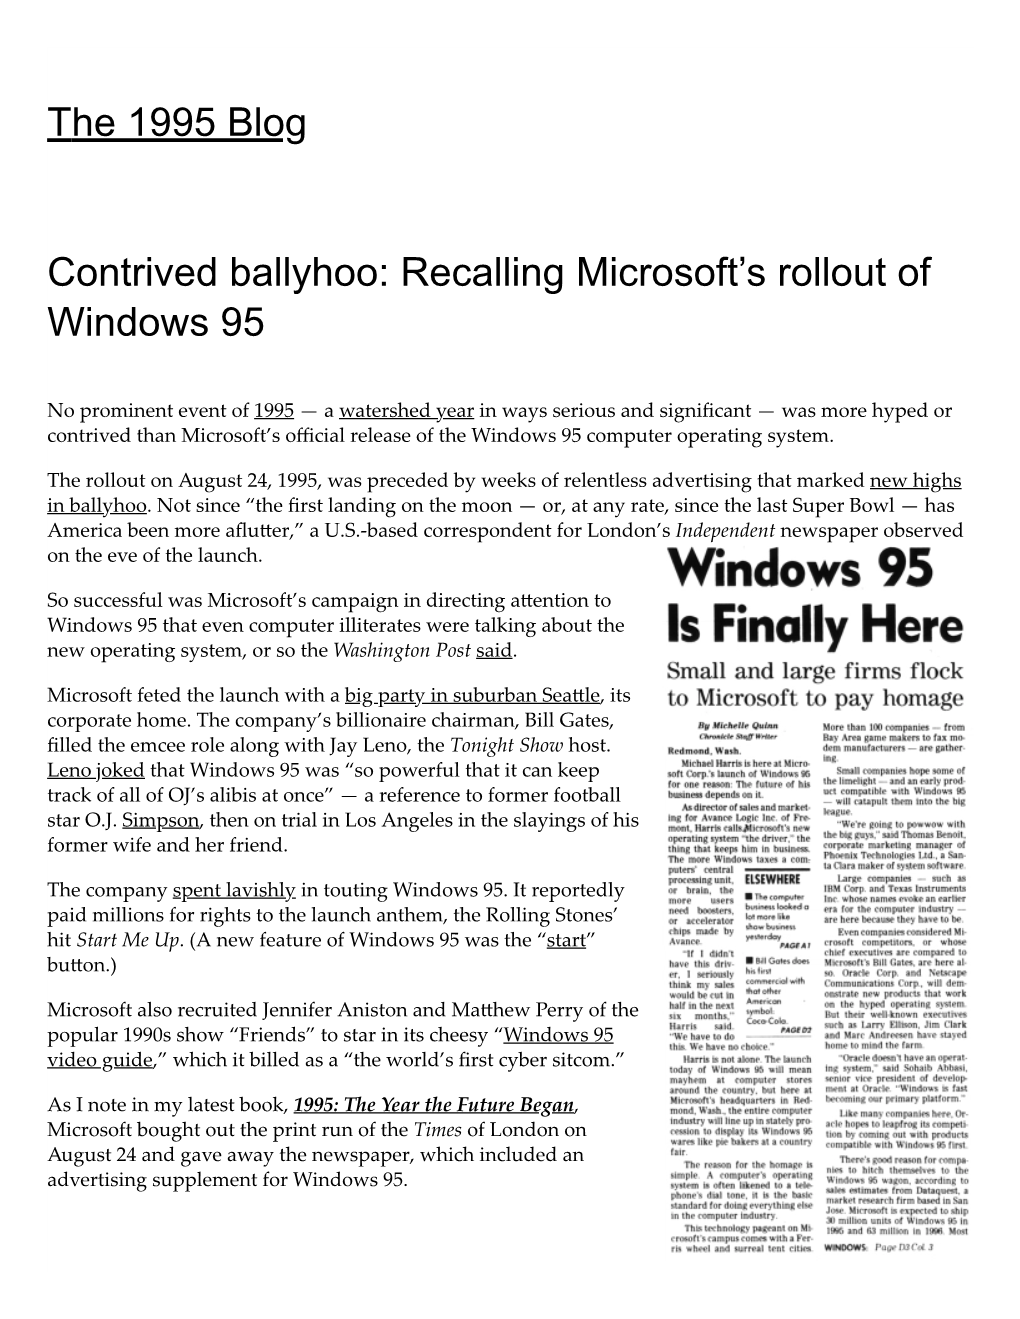 Recalling Microsoft's Rollout of Windows 95